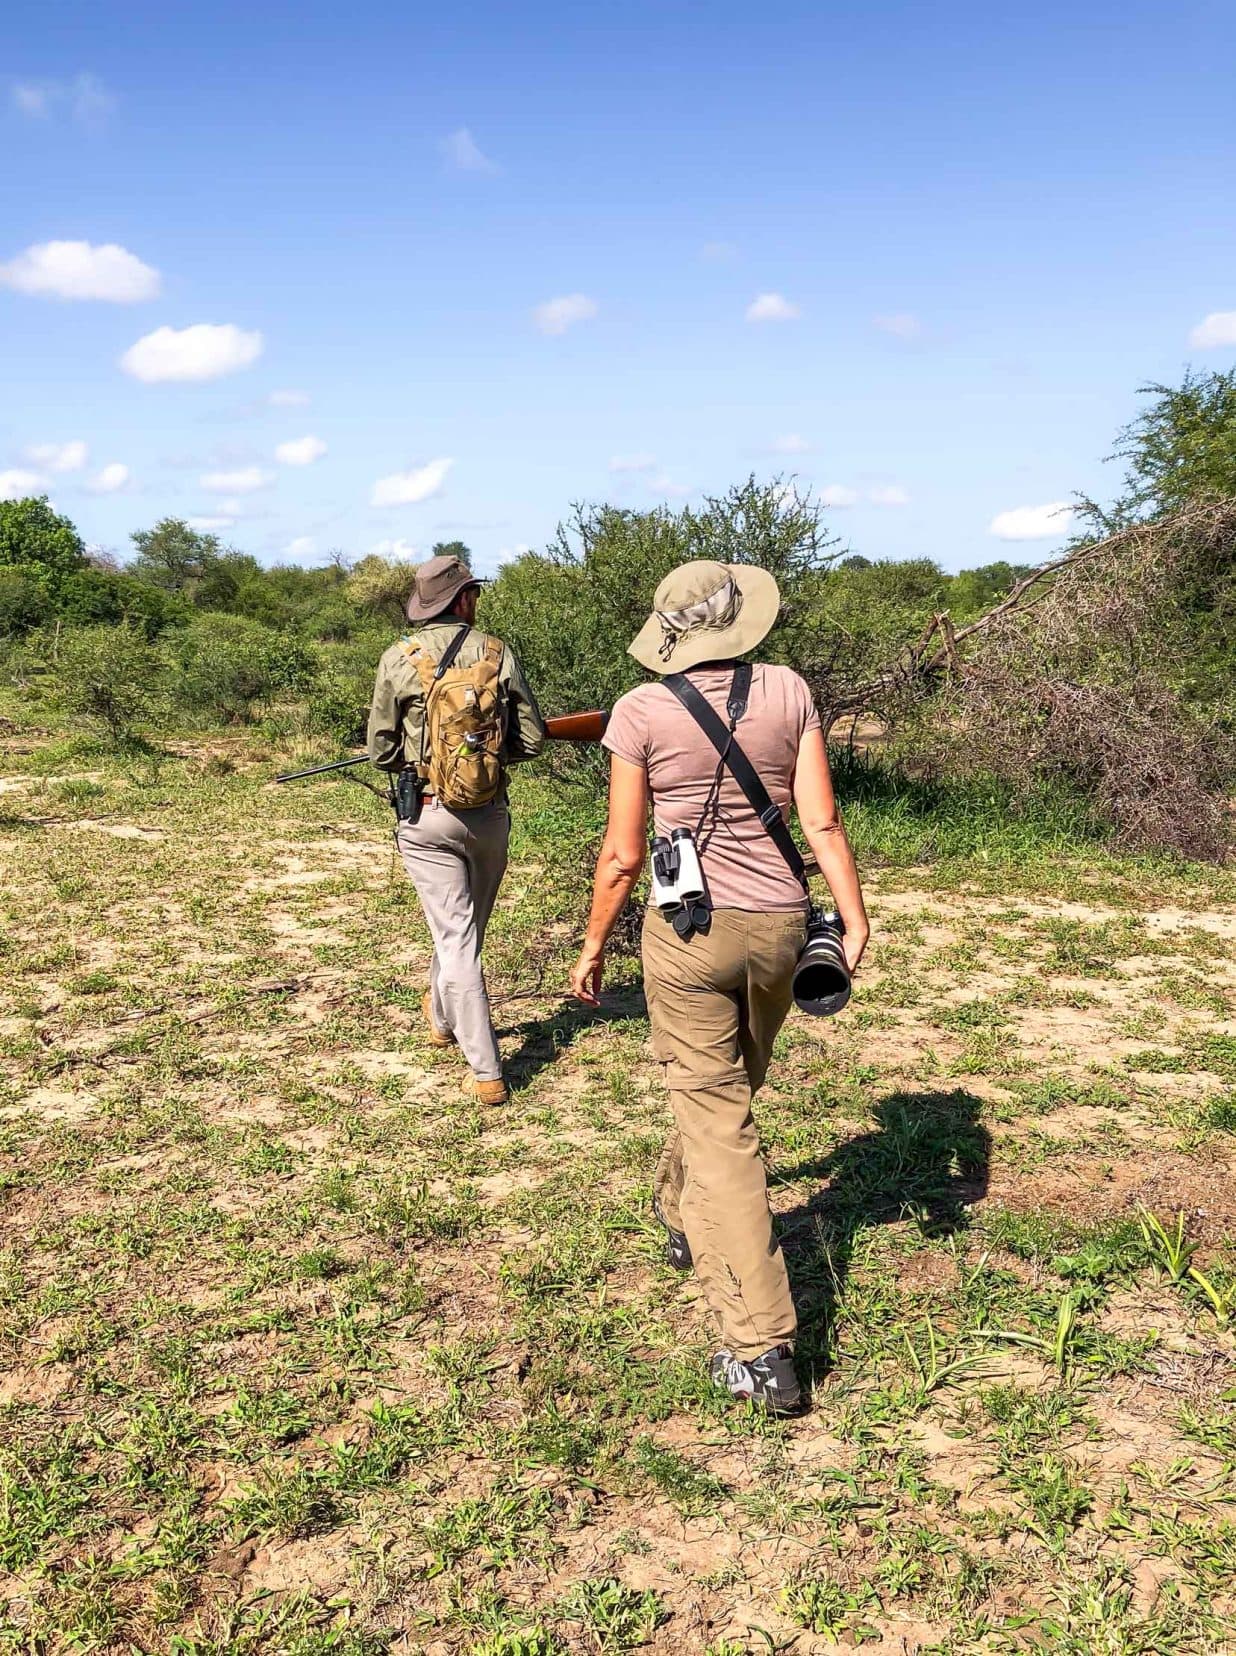 walking-safari-in-teh south african bush with a guide carrying a gun